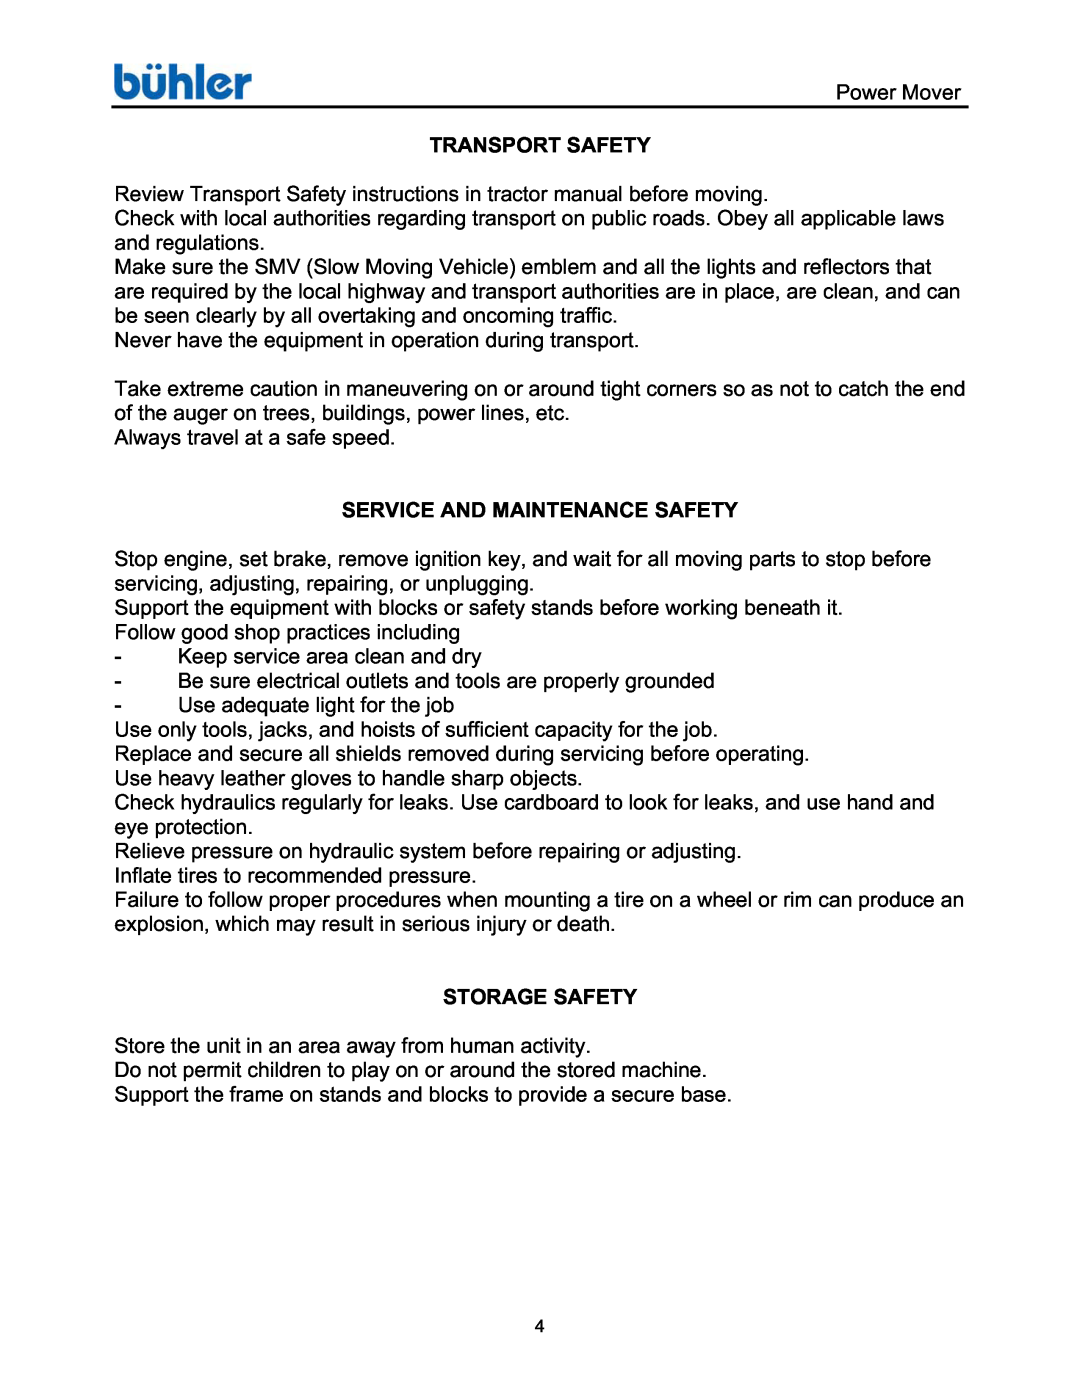 Buhler FK368 manual Transport Safety, Service And Maintenance Safety, Storage Safety 